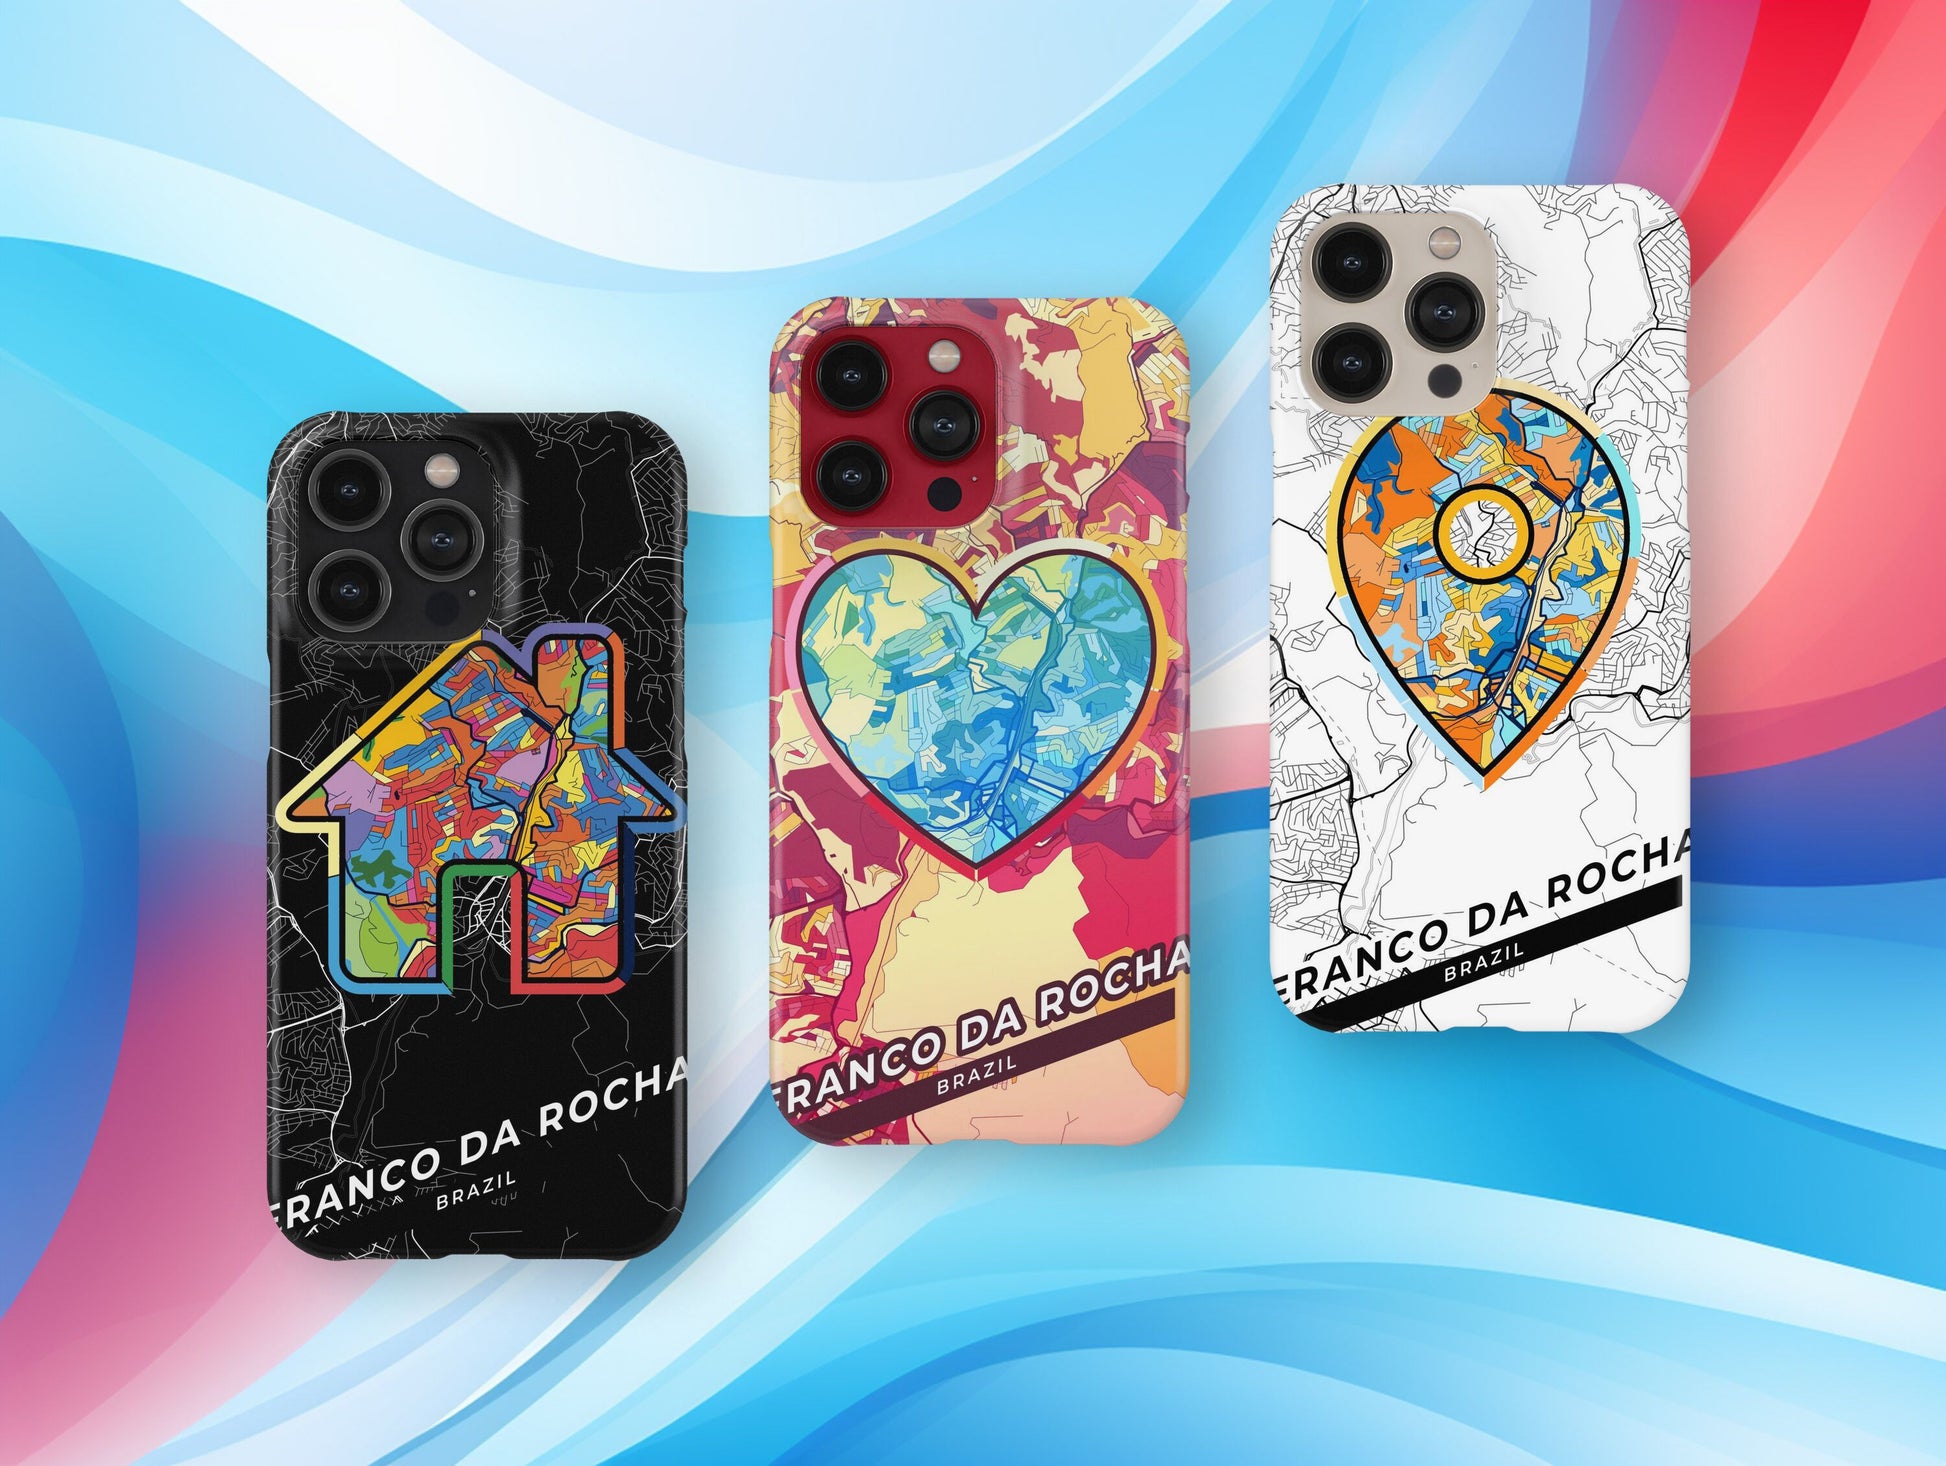 Franco Da Rocha Brazil slim phone case with colorful icon. Birthday, wedding or housewarming gift. Couple match cases.